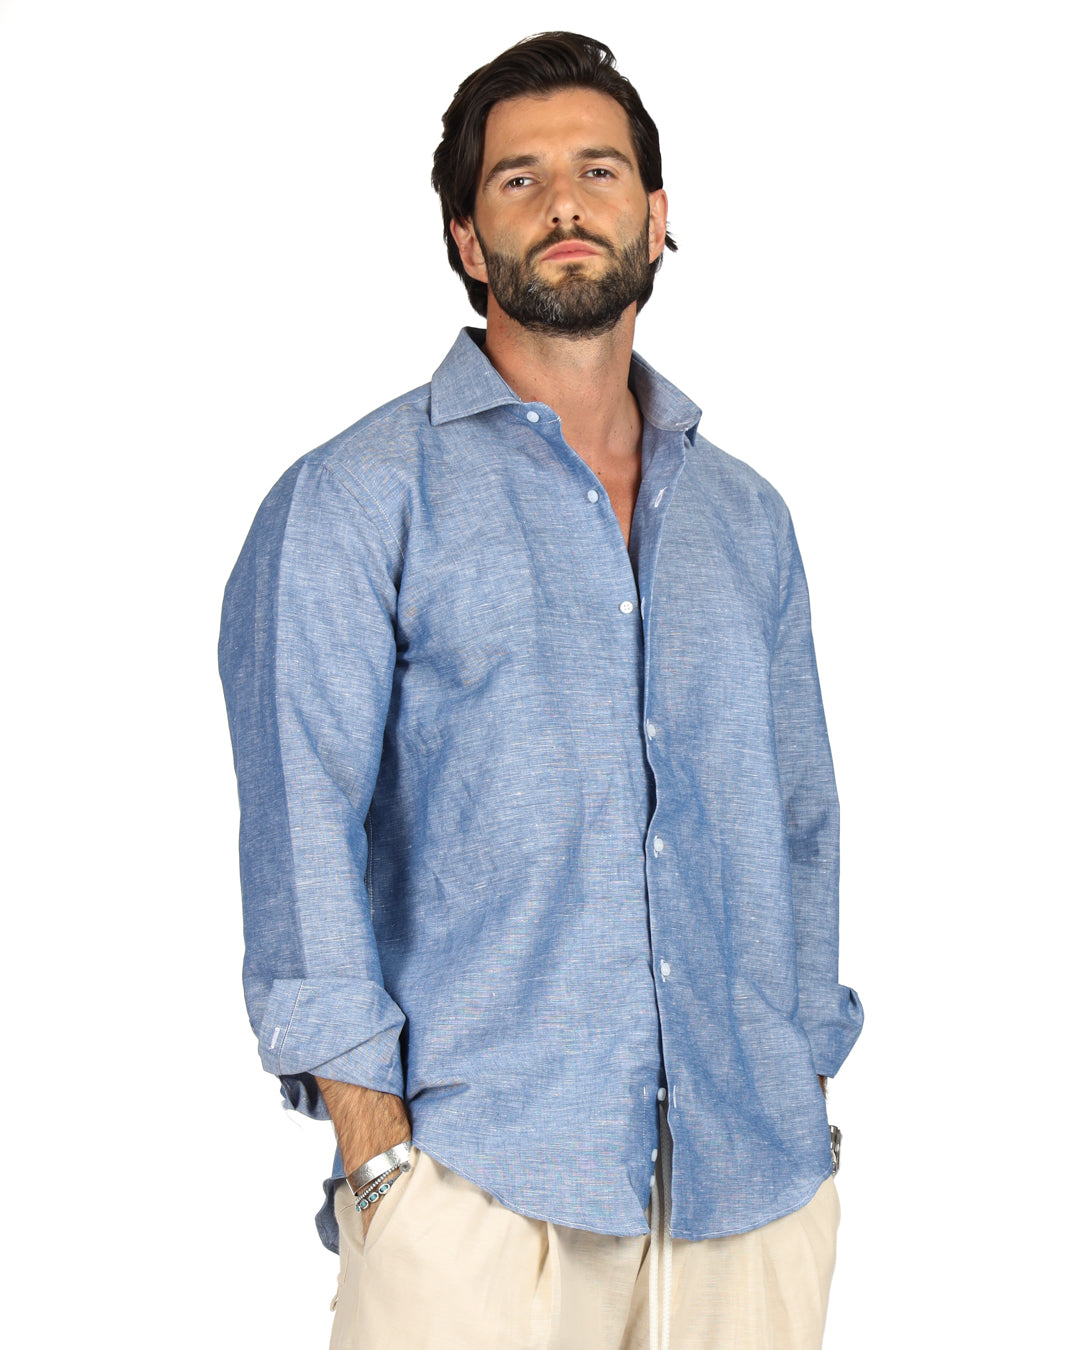 Praiano - Classic linen denim shirt